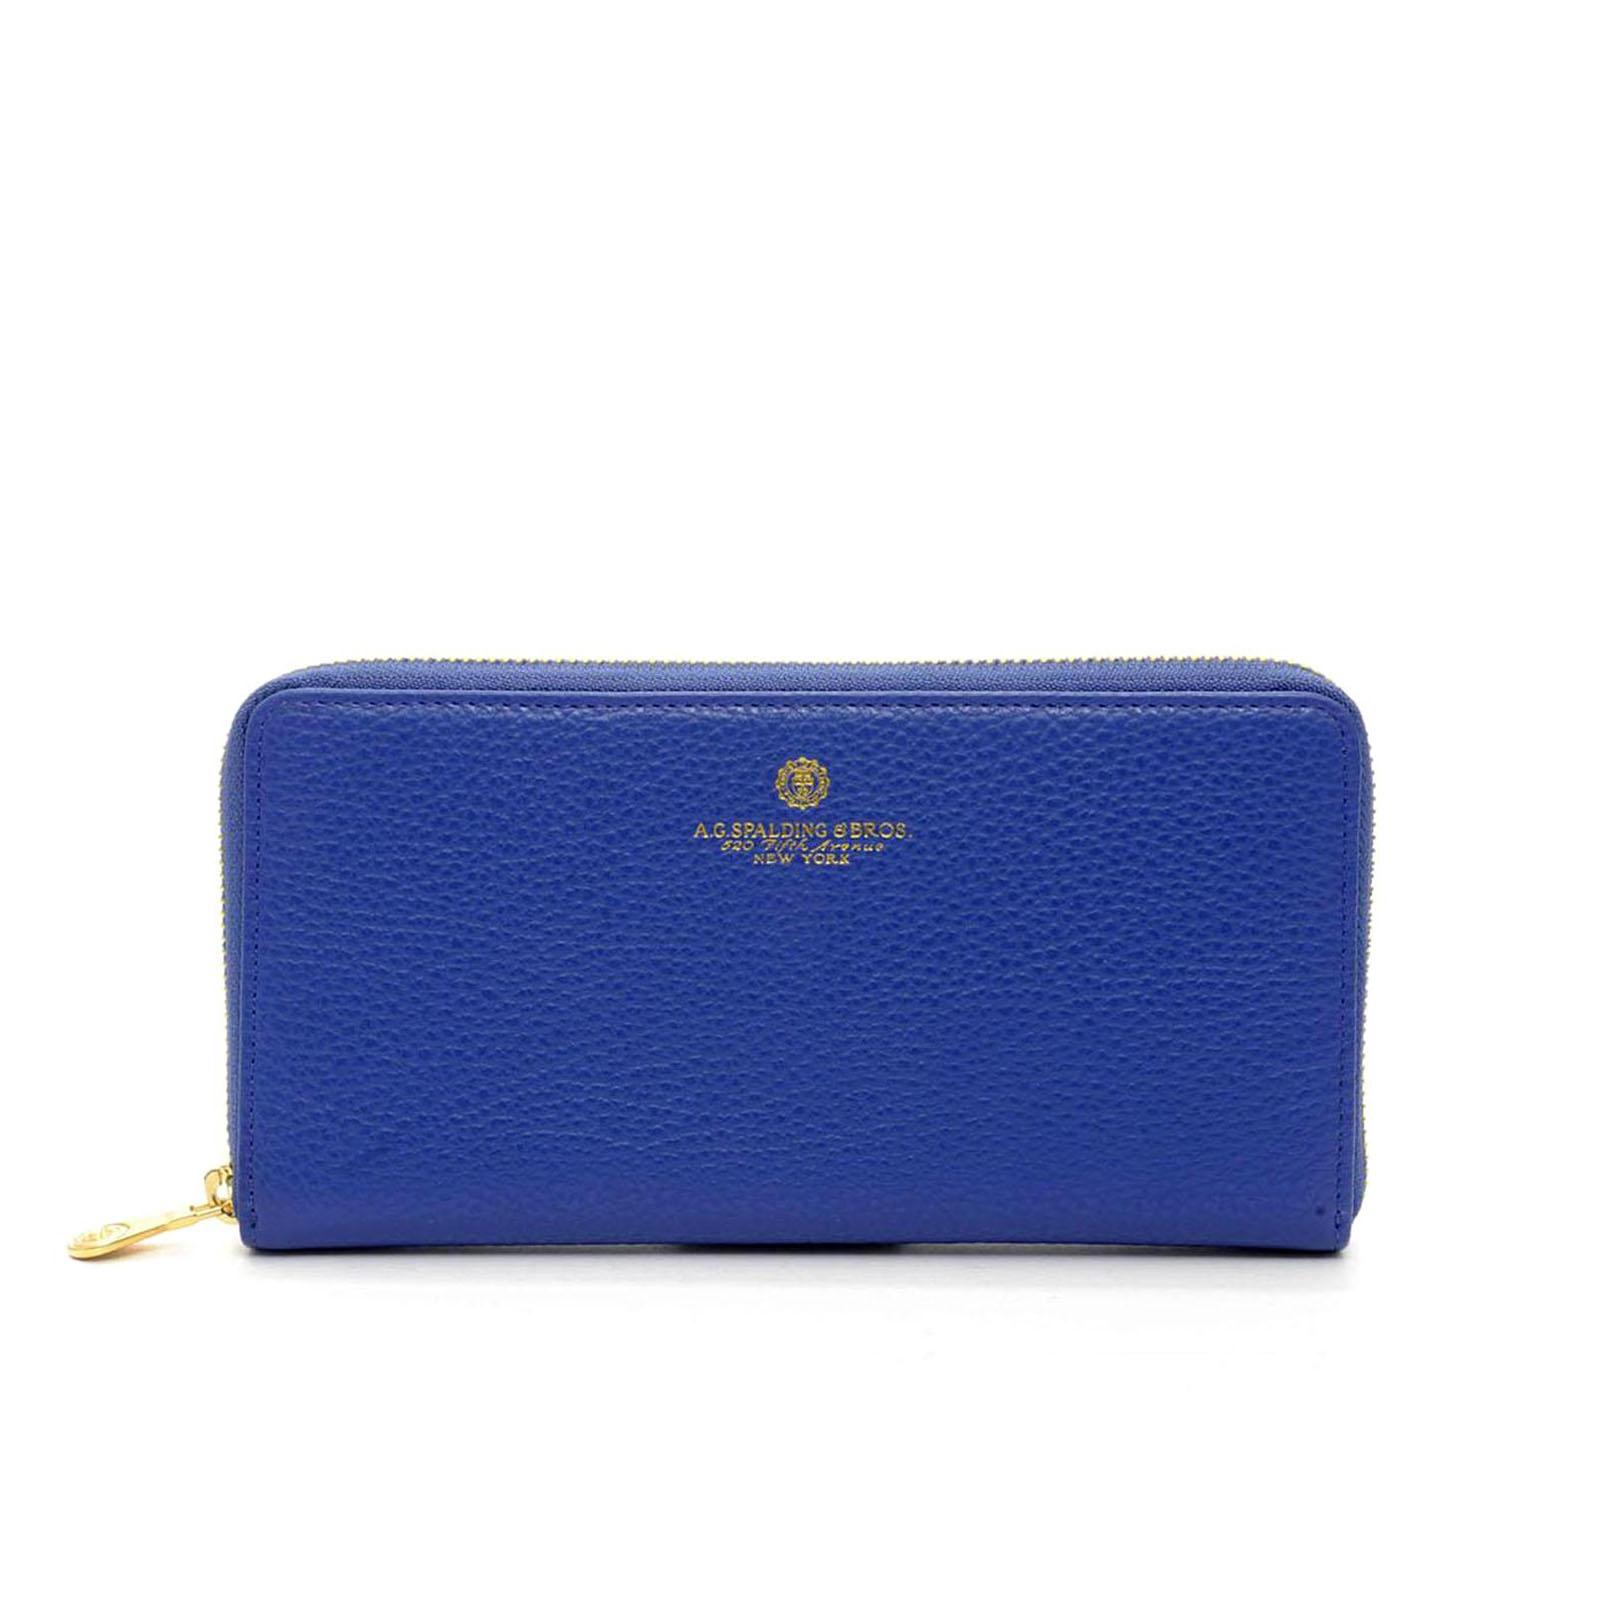 All Around Maxi Woman Wallet Tiffany BLUE ROYAL 